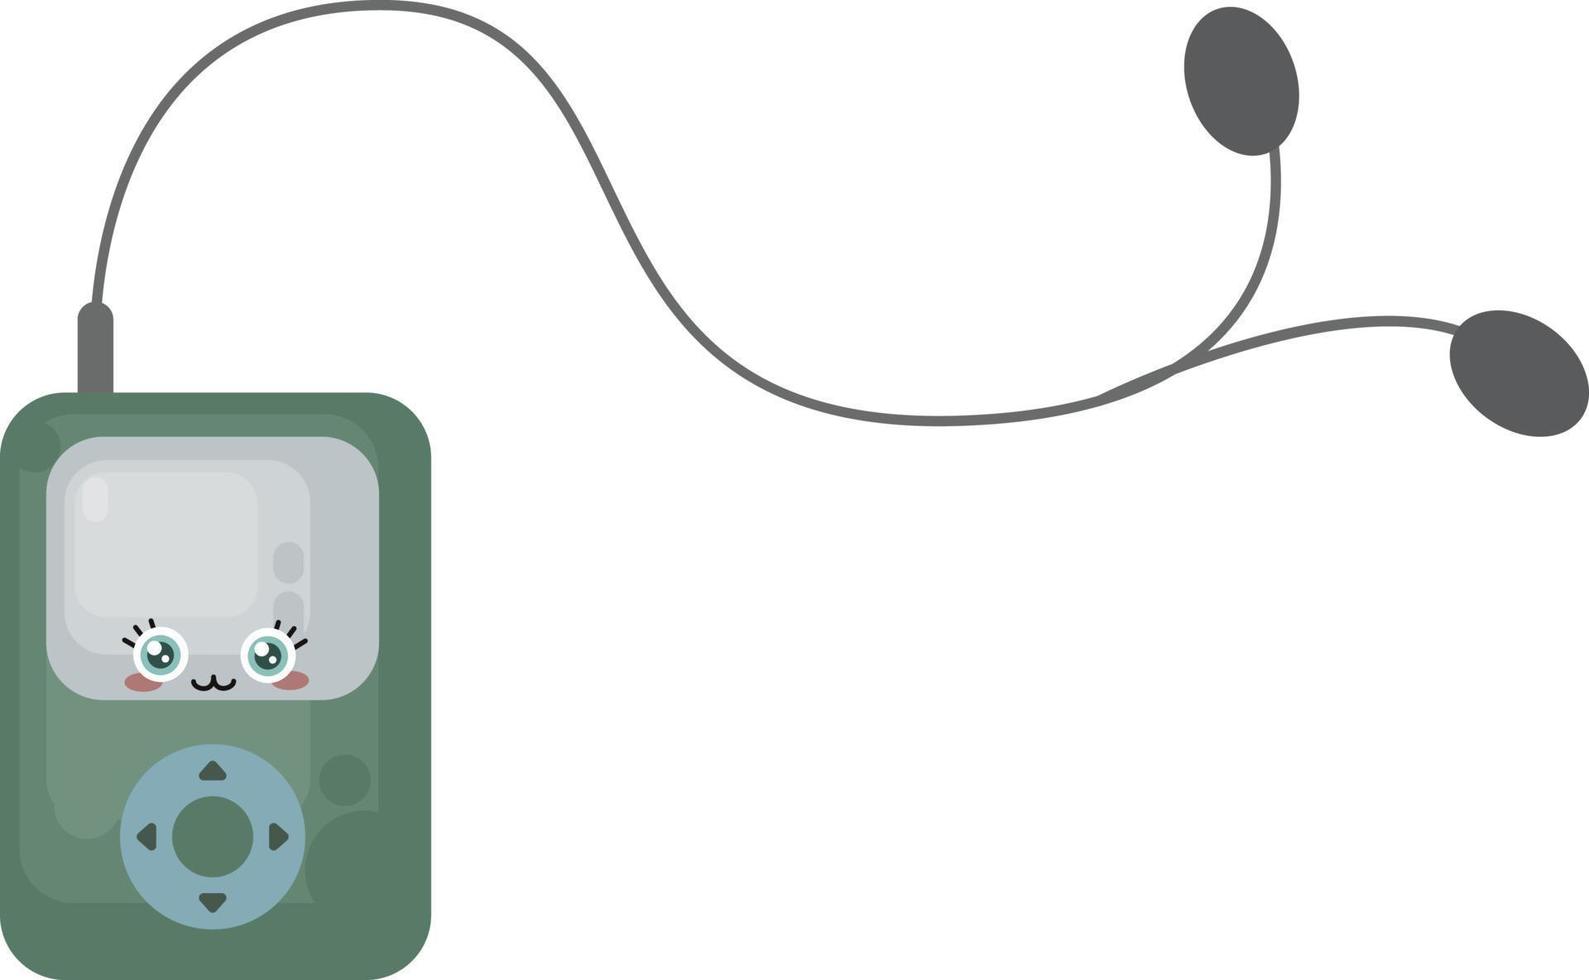 Mp3 player, illustration, vector on white background